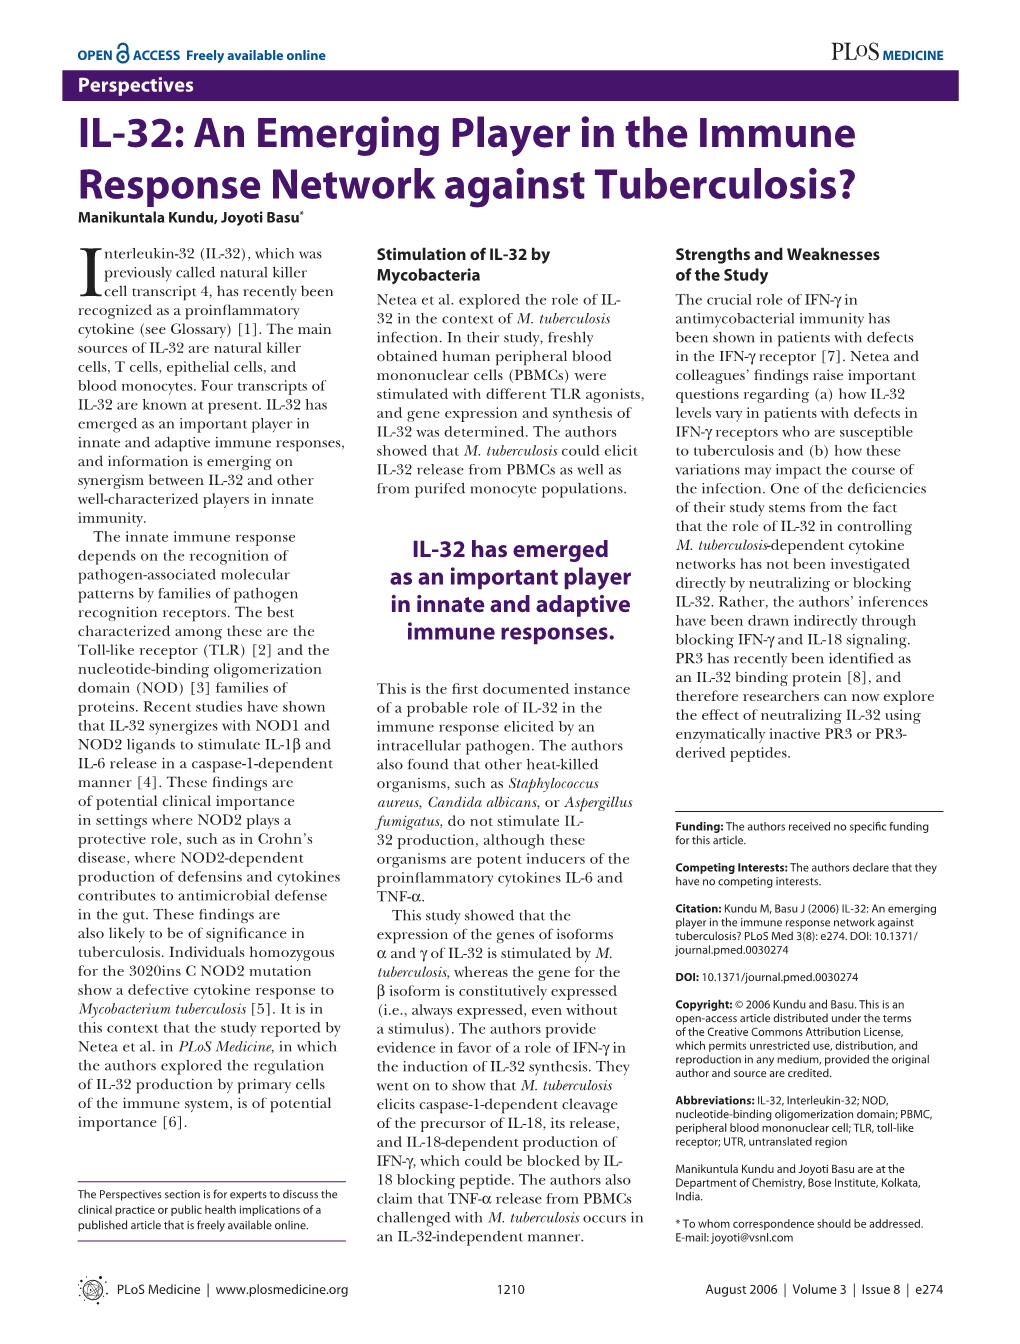 IL-32: an Emerging Player in the Immune Response Network Against Tuberculosis? Manikuntala Kundu, Joyoti Basu*